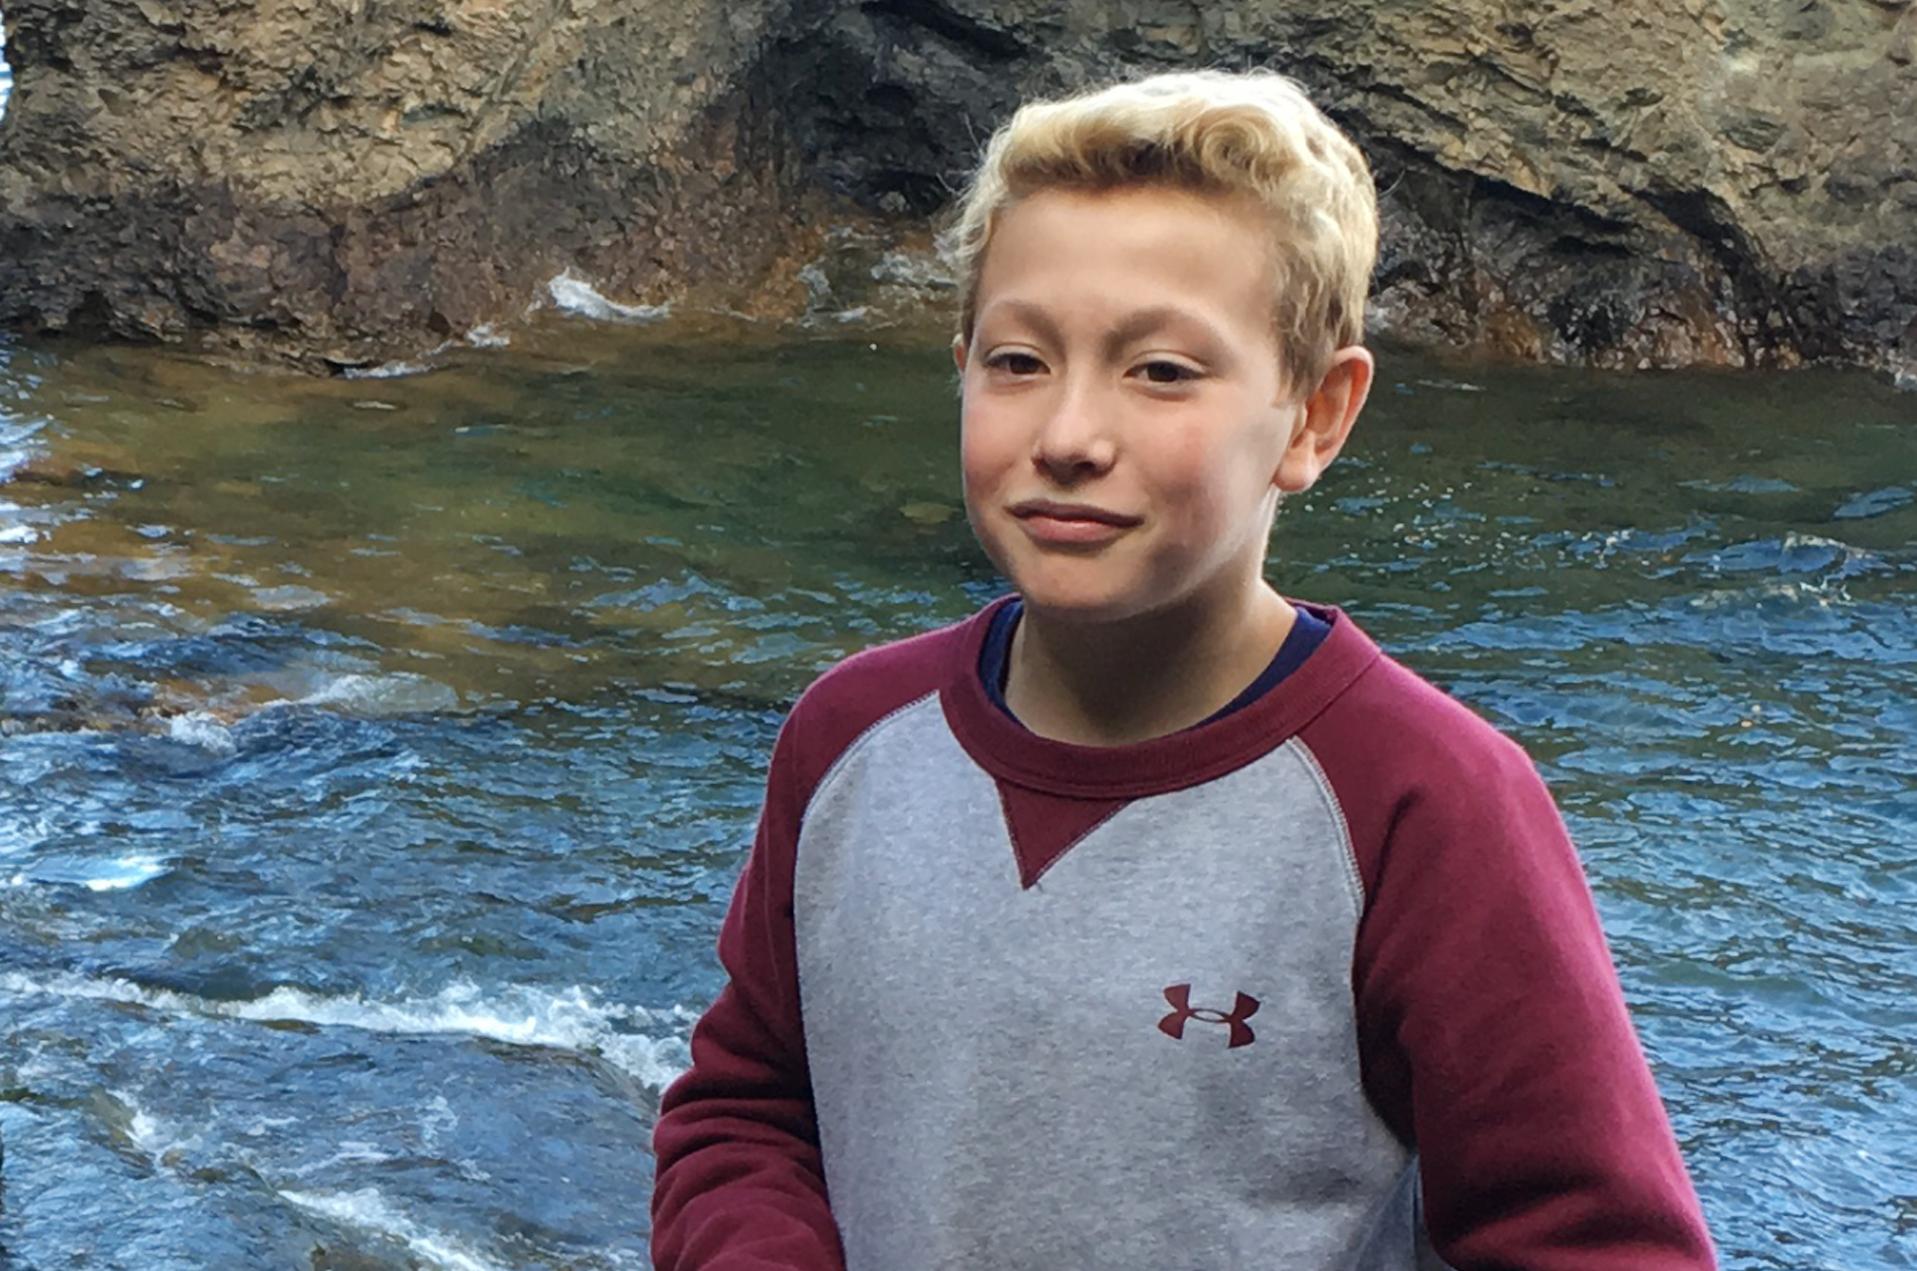 Prank gone wrong Boy, 11, hangs himself after fake social medi